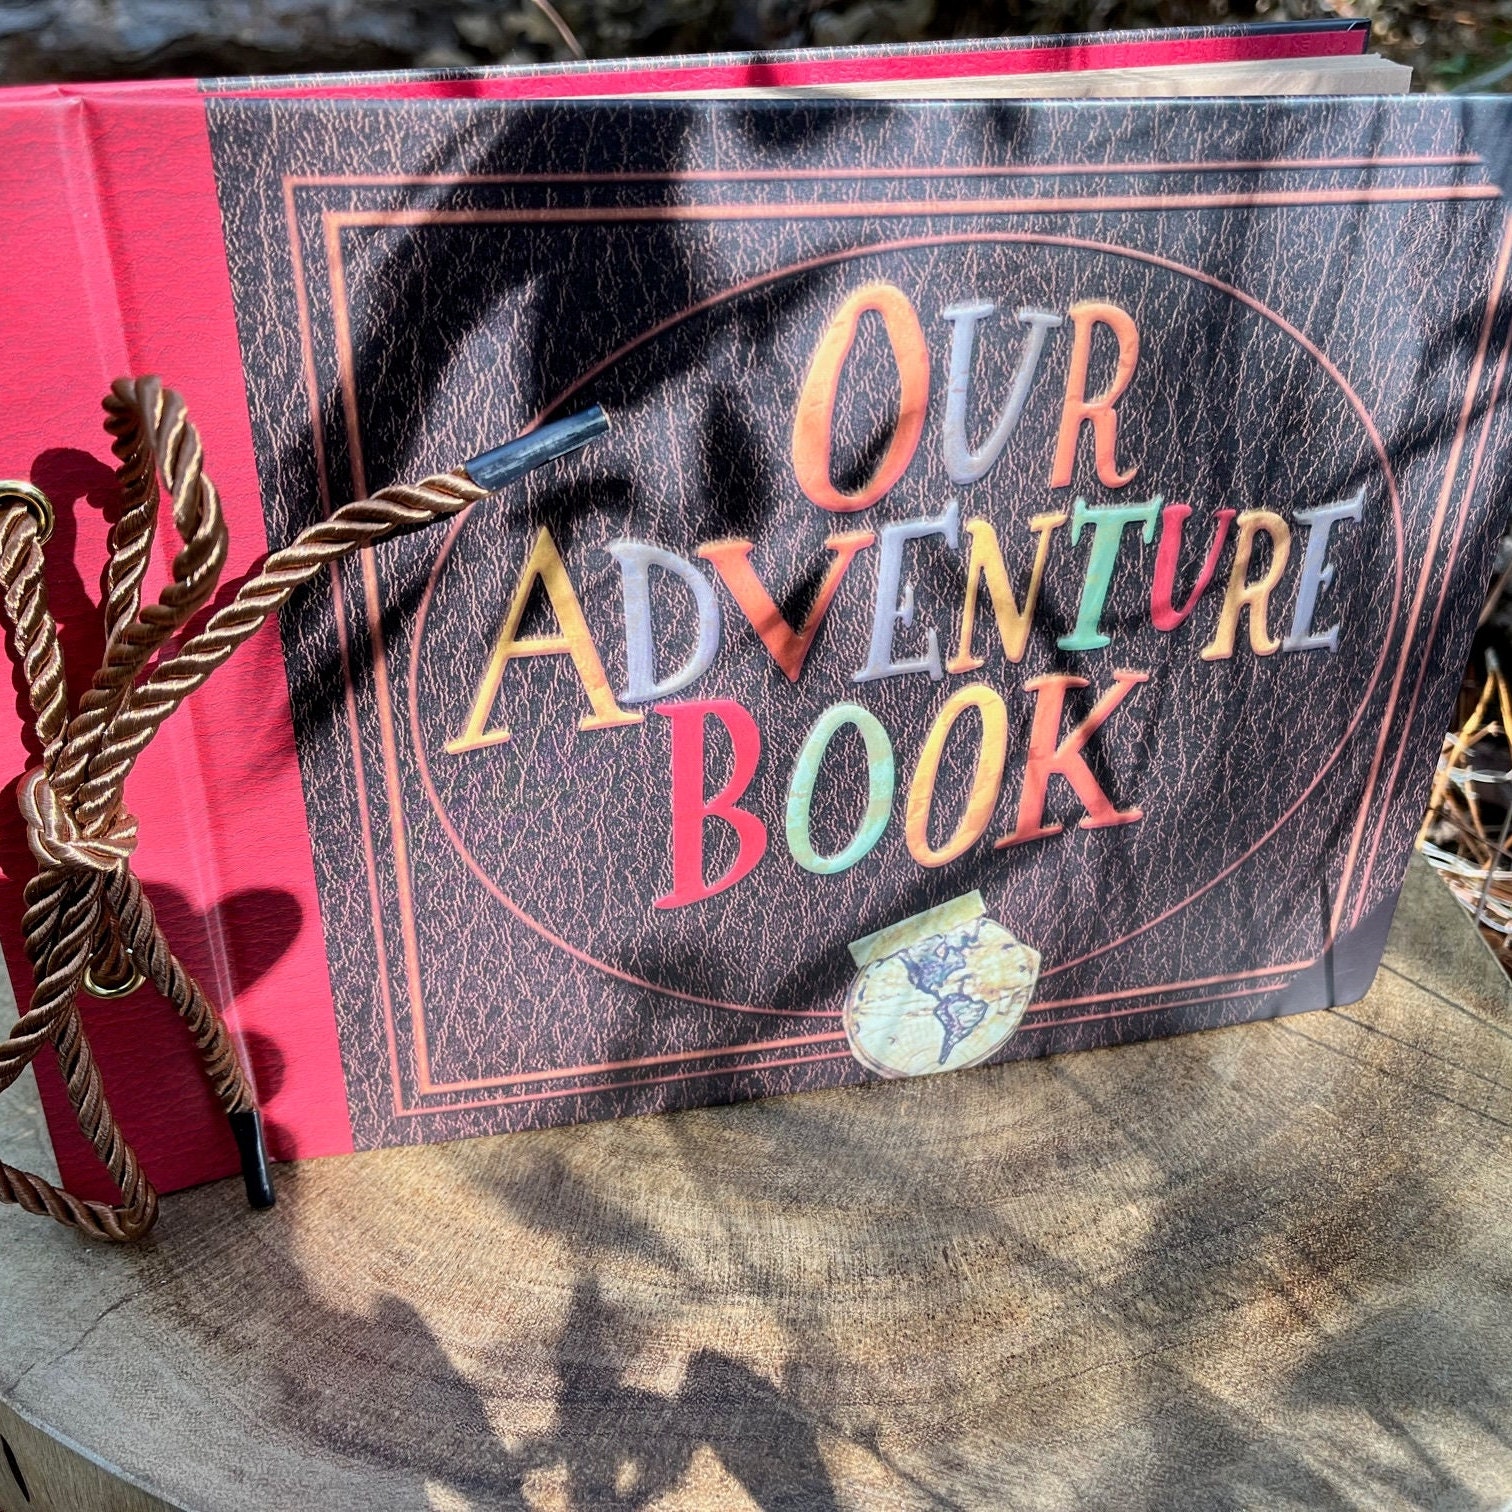  Scrapbook Photo Album,Our Adventure Book Scrapbook, Embossed  Words Hard Cover Movie Up Travel Scrapbook for Anniversary, Wedding,  Travelling, Baby Shower, etc (Adventure Book)